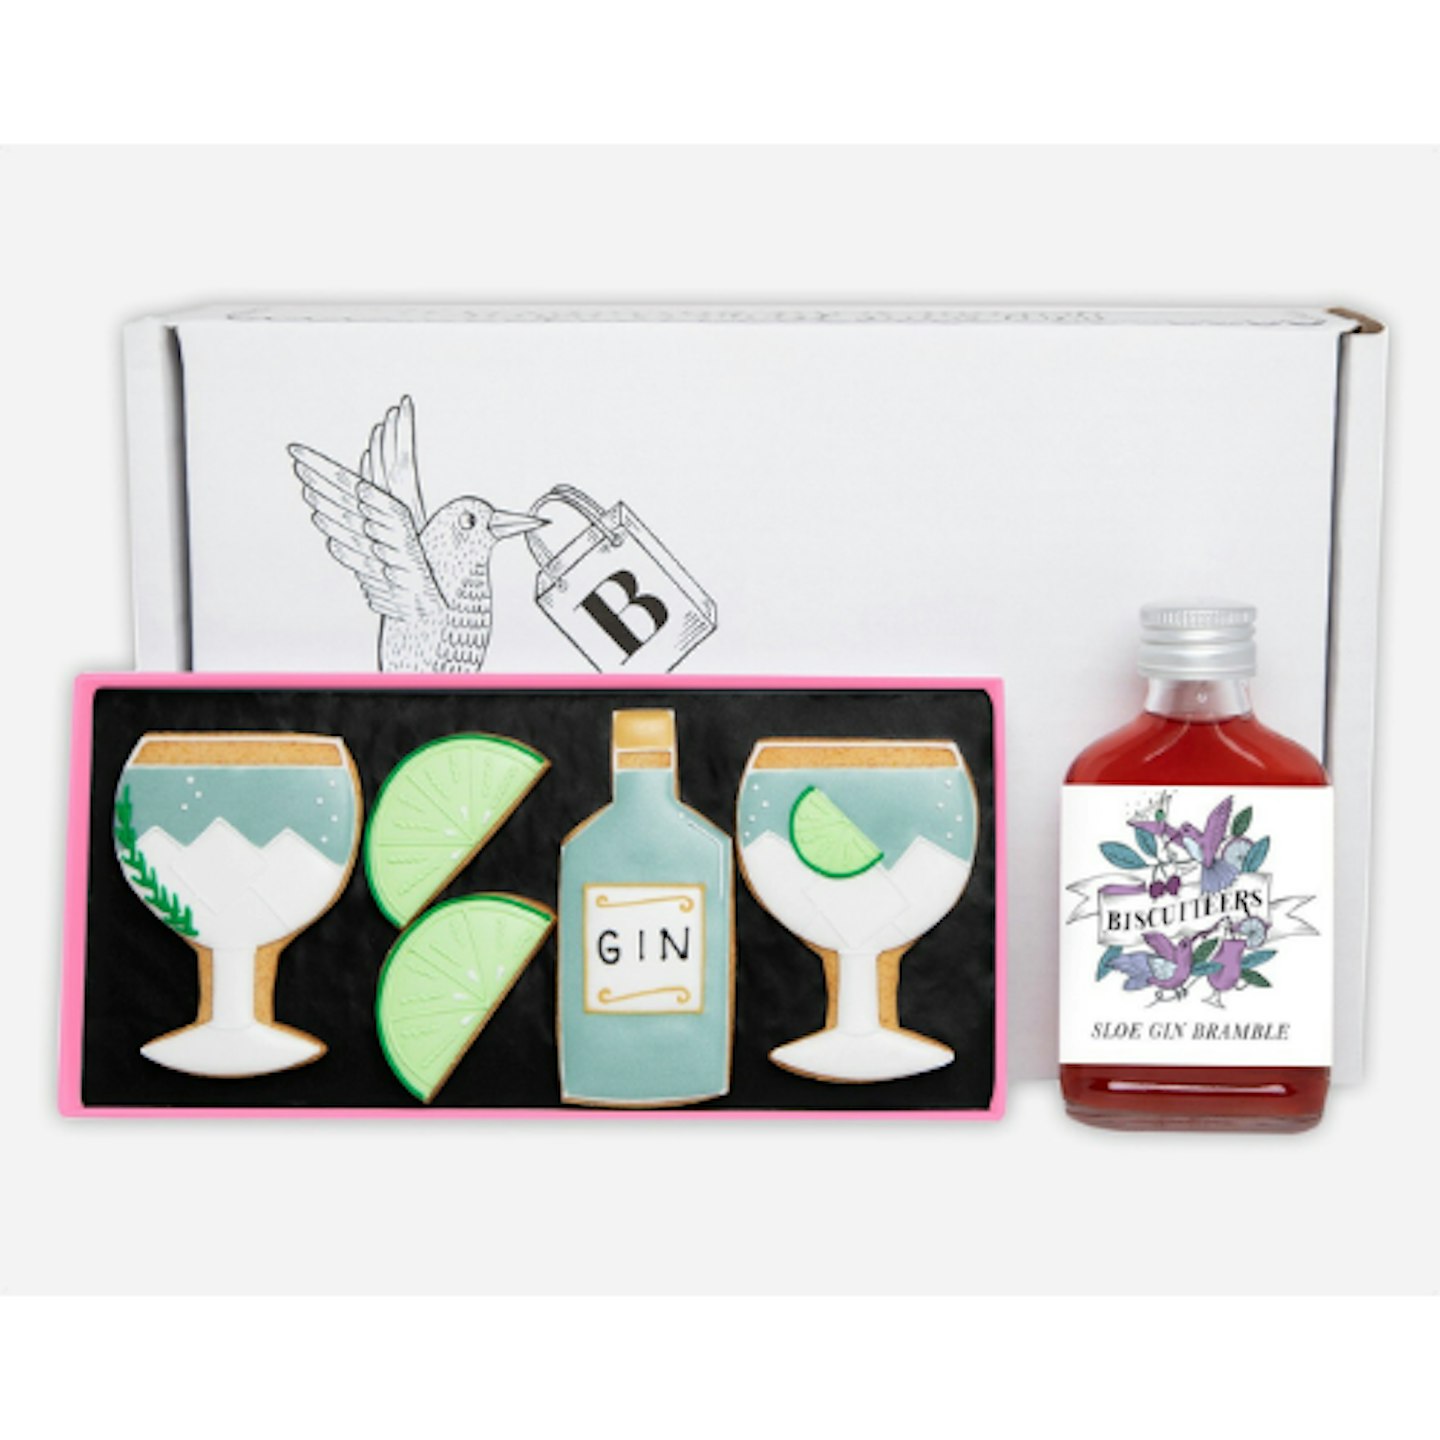 Gin & Tonic Letterbox Gift Box